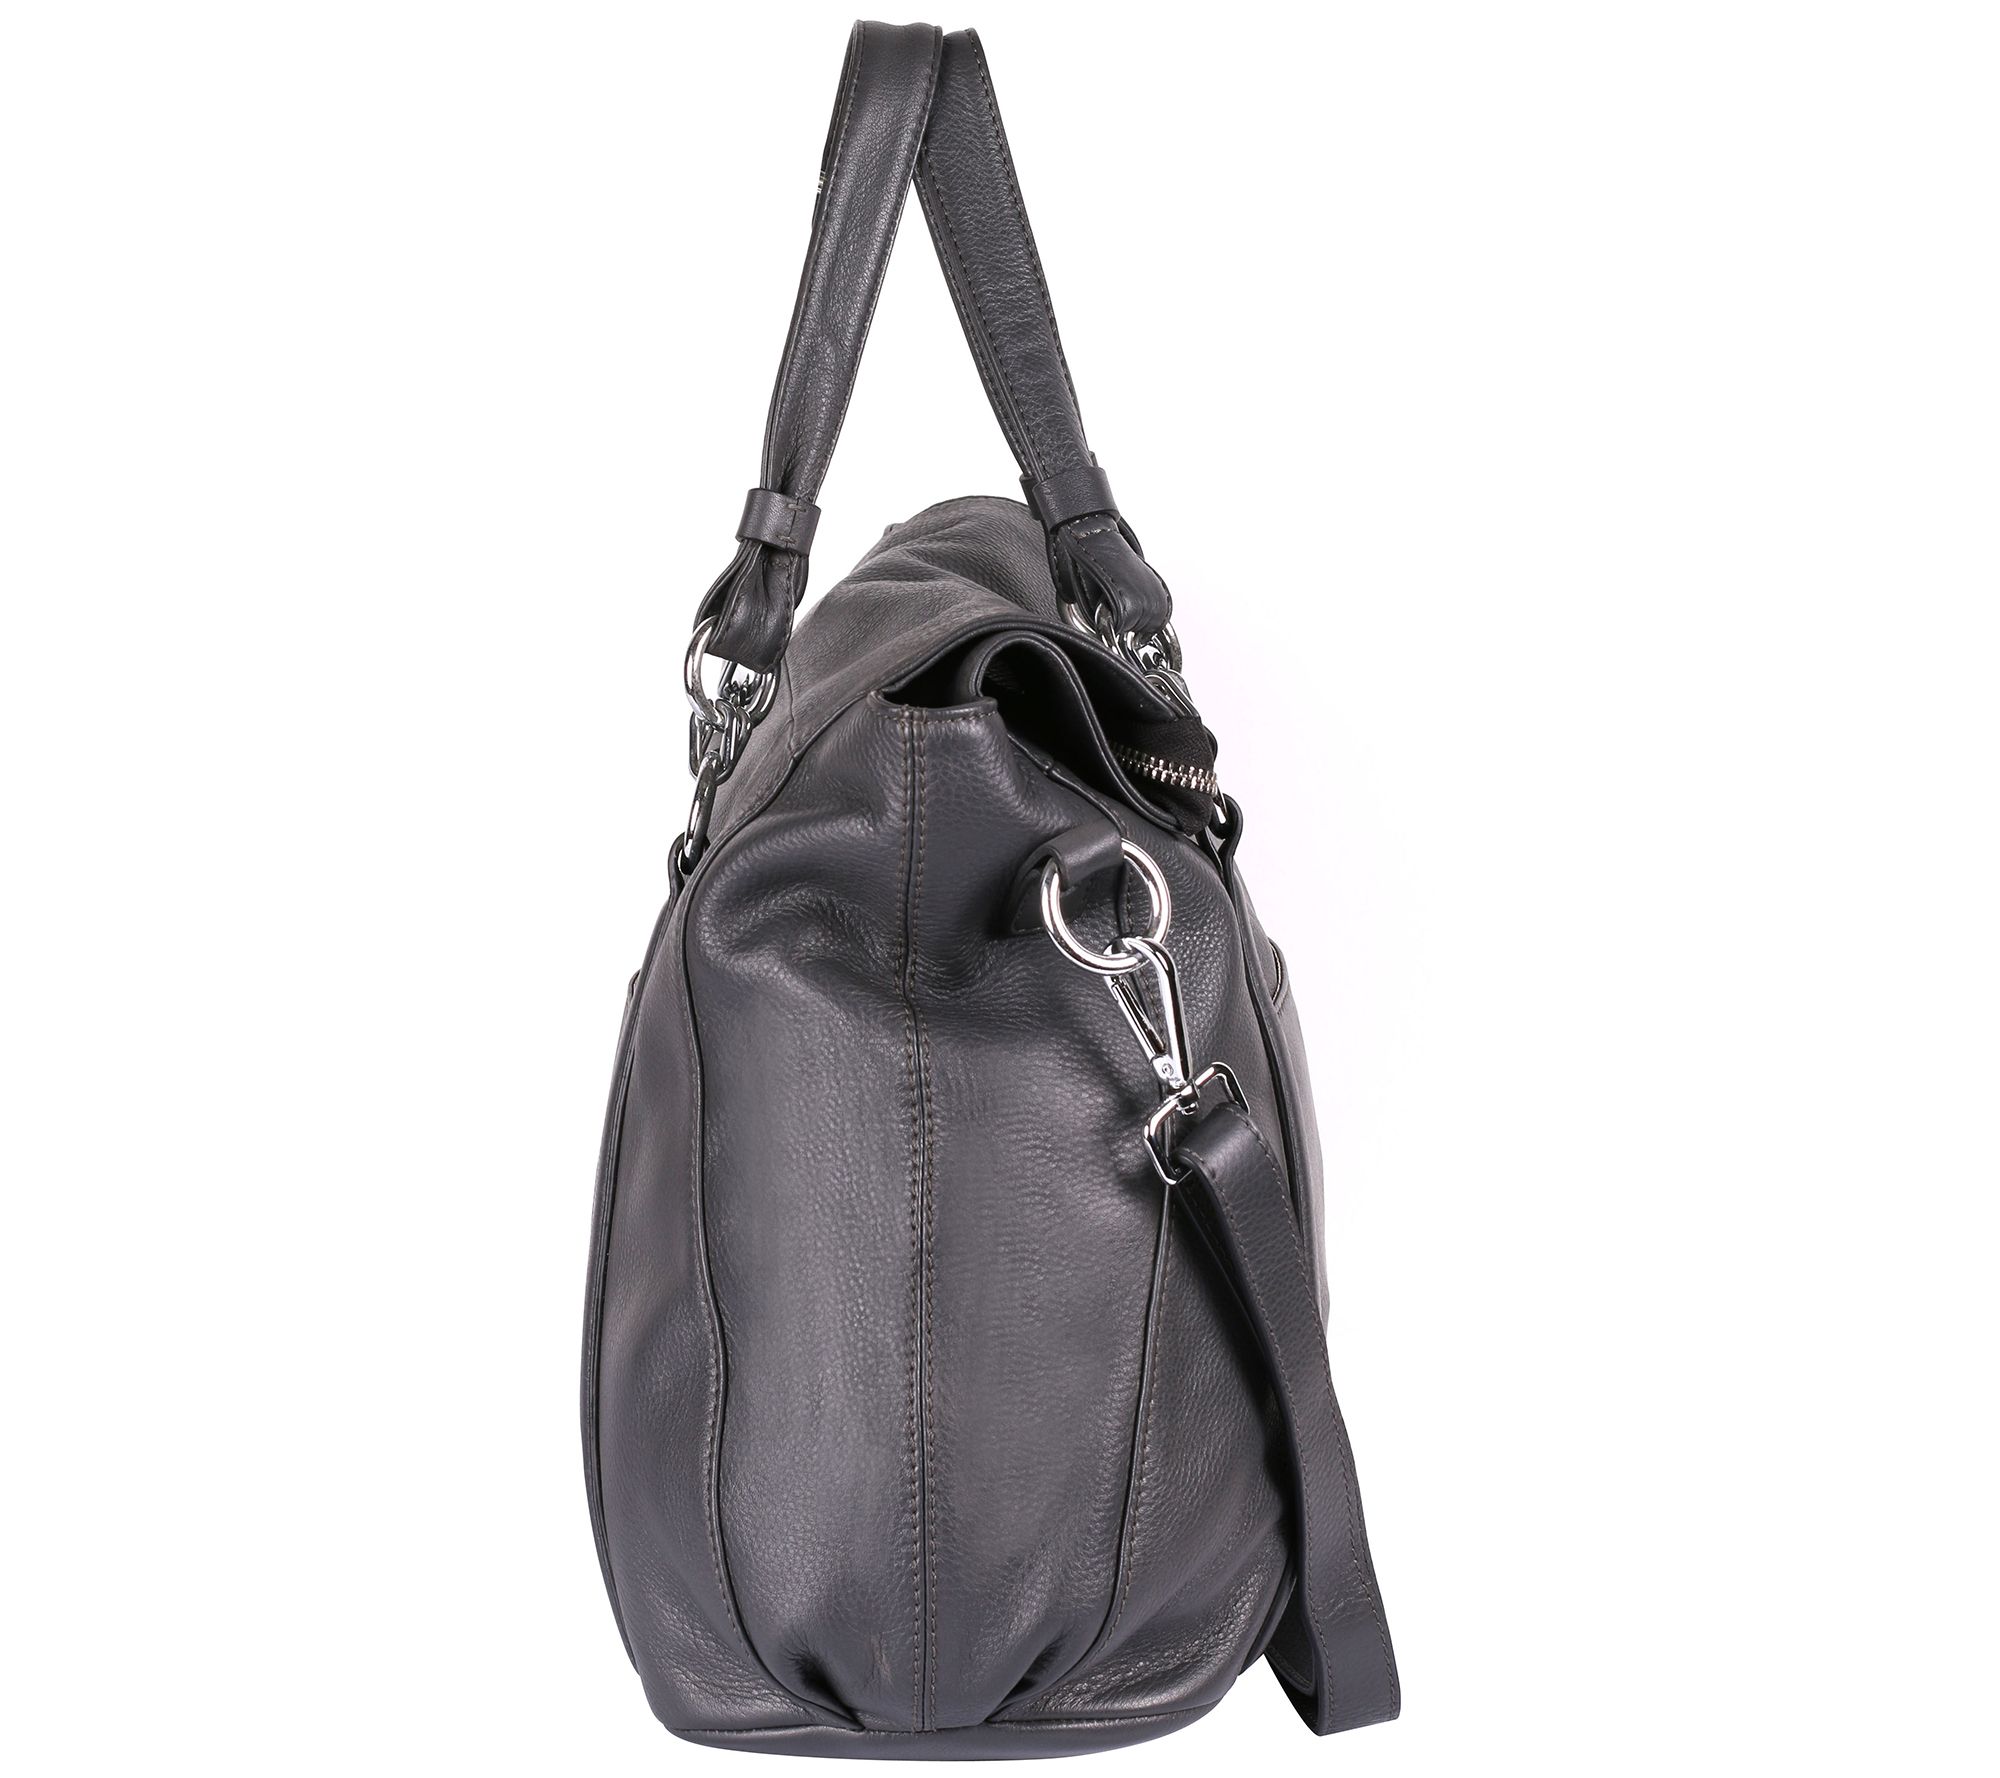 Karla Hanson Irene Leather Large Satchel Bag - QVC.com